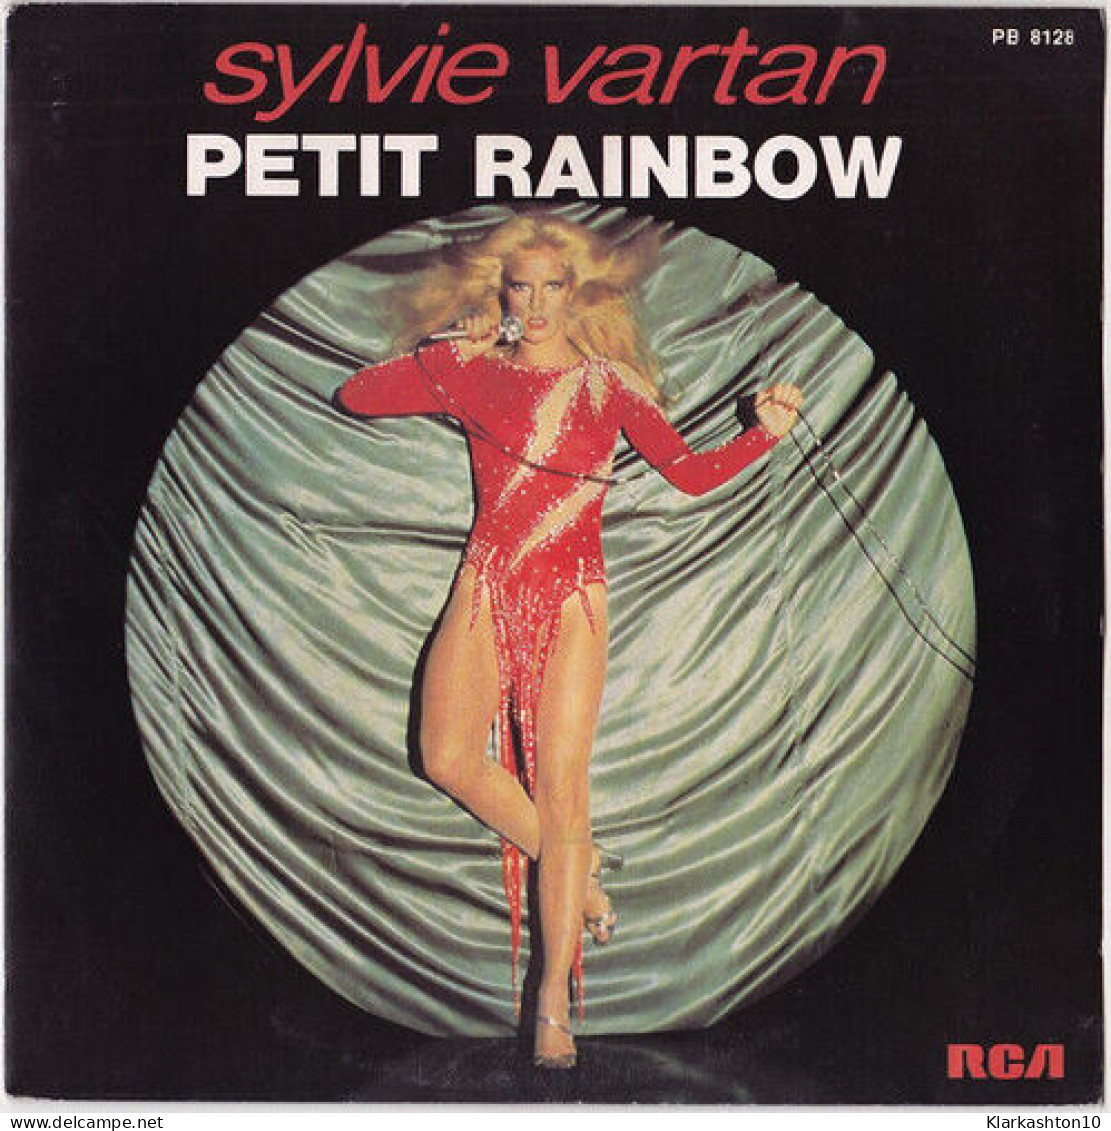 Petit Rainbow - Unclassified